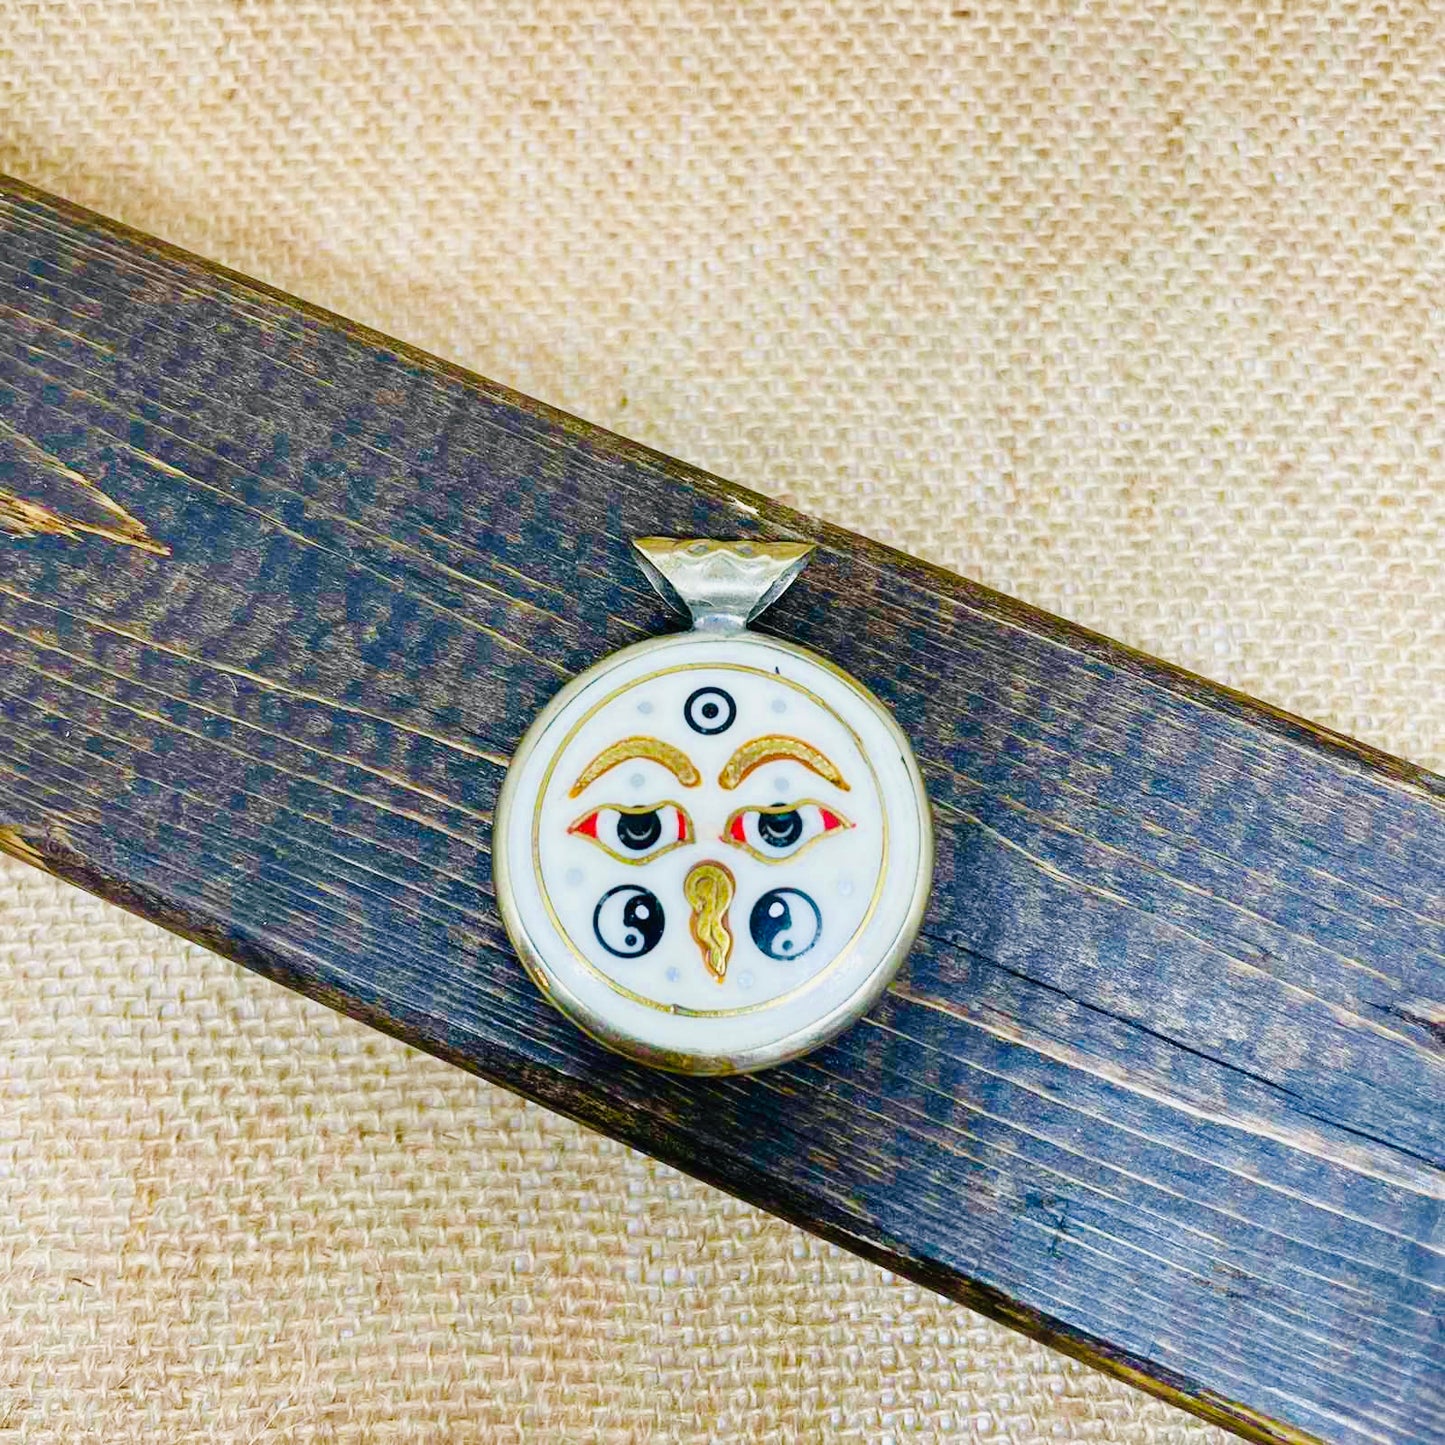 Handmade Double Sided Tibetan Pendant with Eye of Buddha and Healing Mantra, Buddha Charm, Buddhist Amulet, Protection Symbol, Aum Necklace